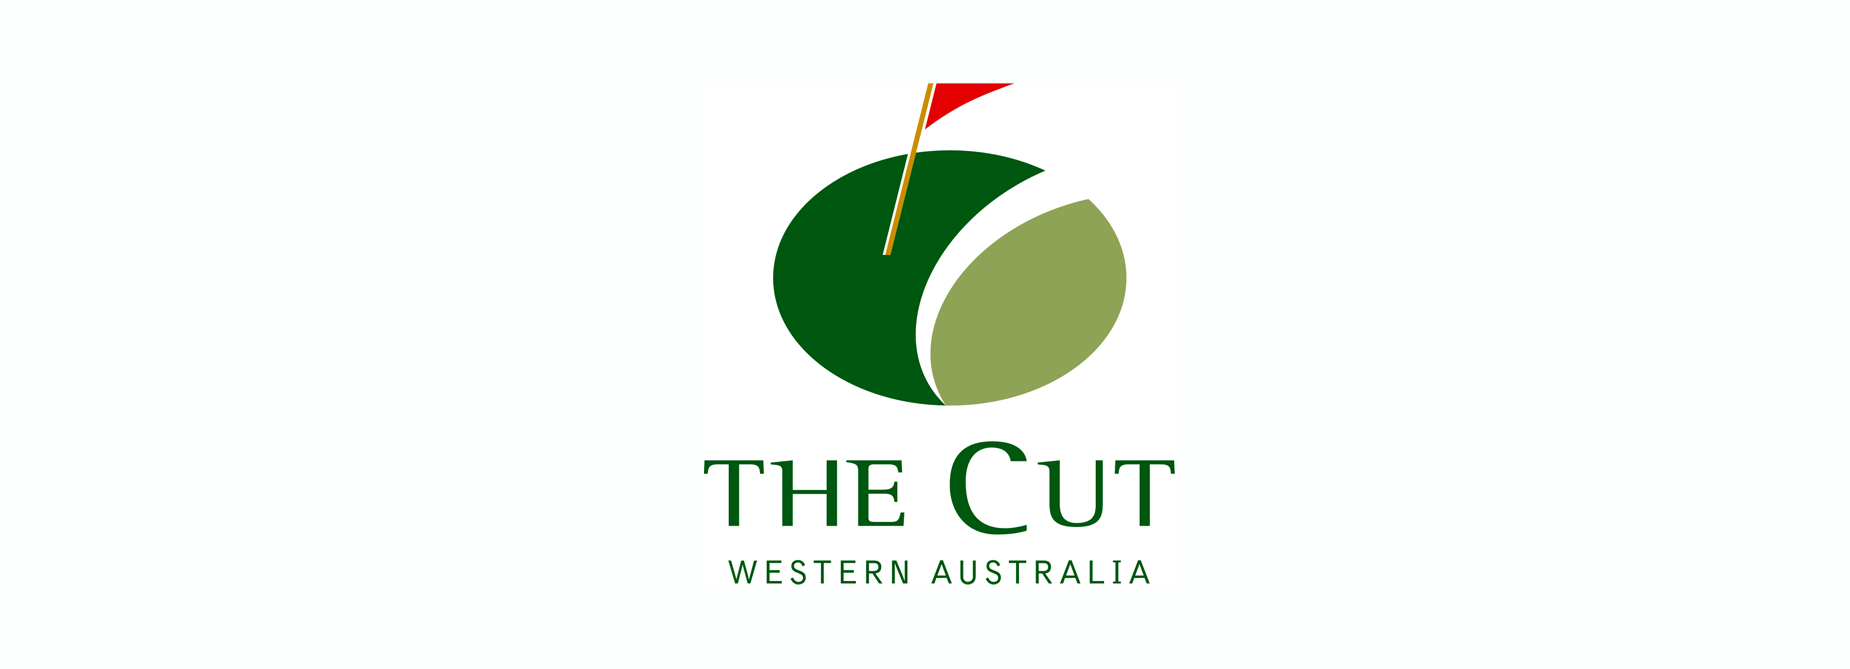 The Cut Golf Course Logo